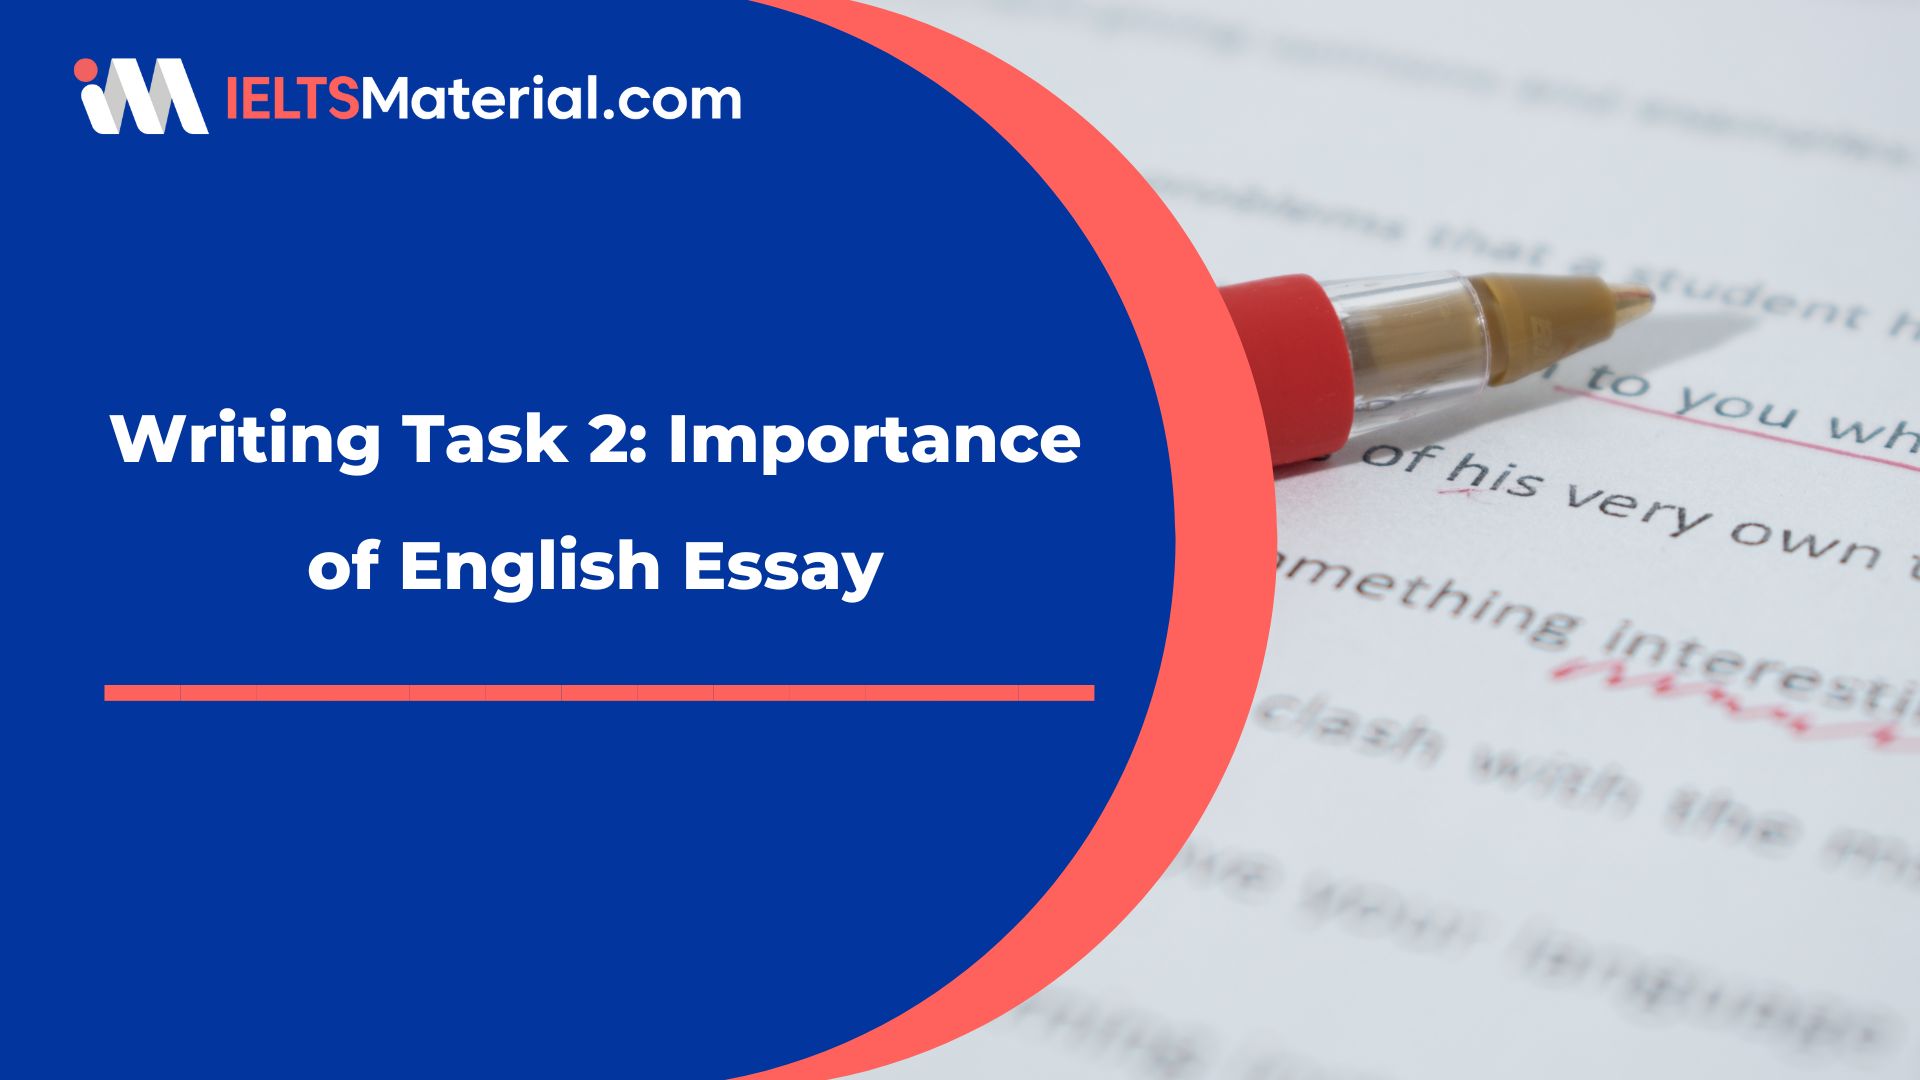 Writing Task 2: Importance of English Essay